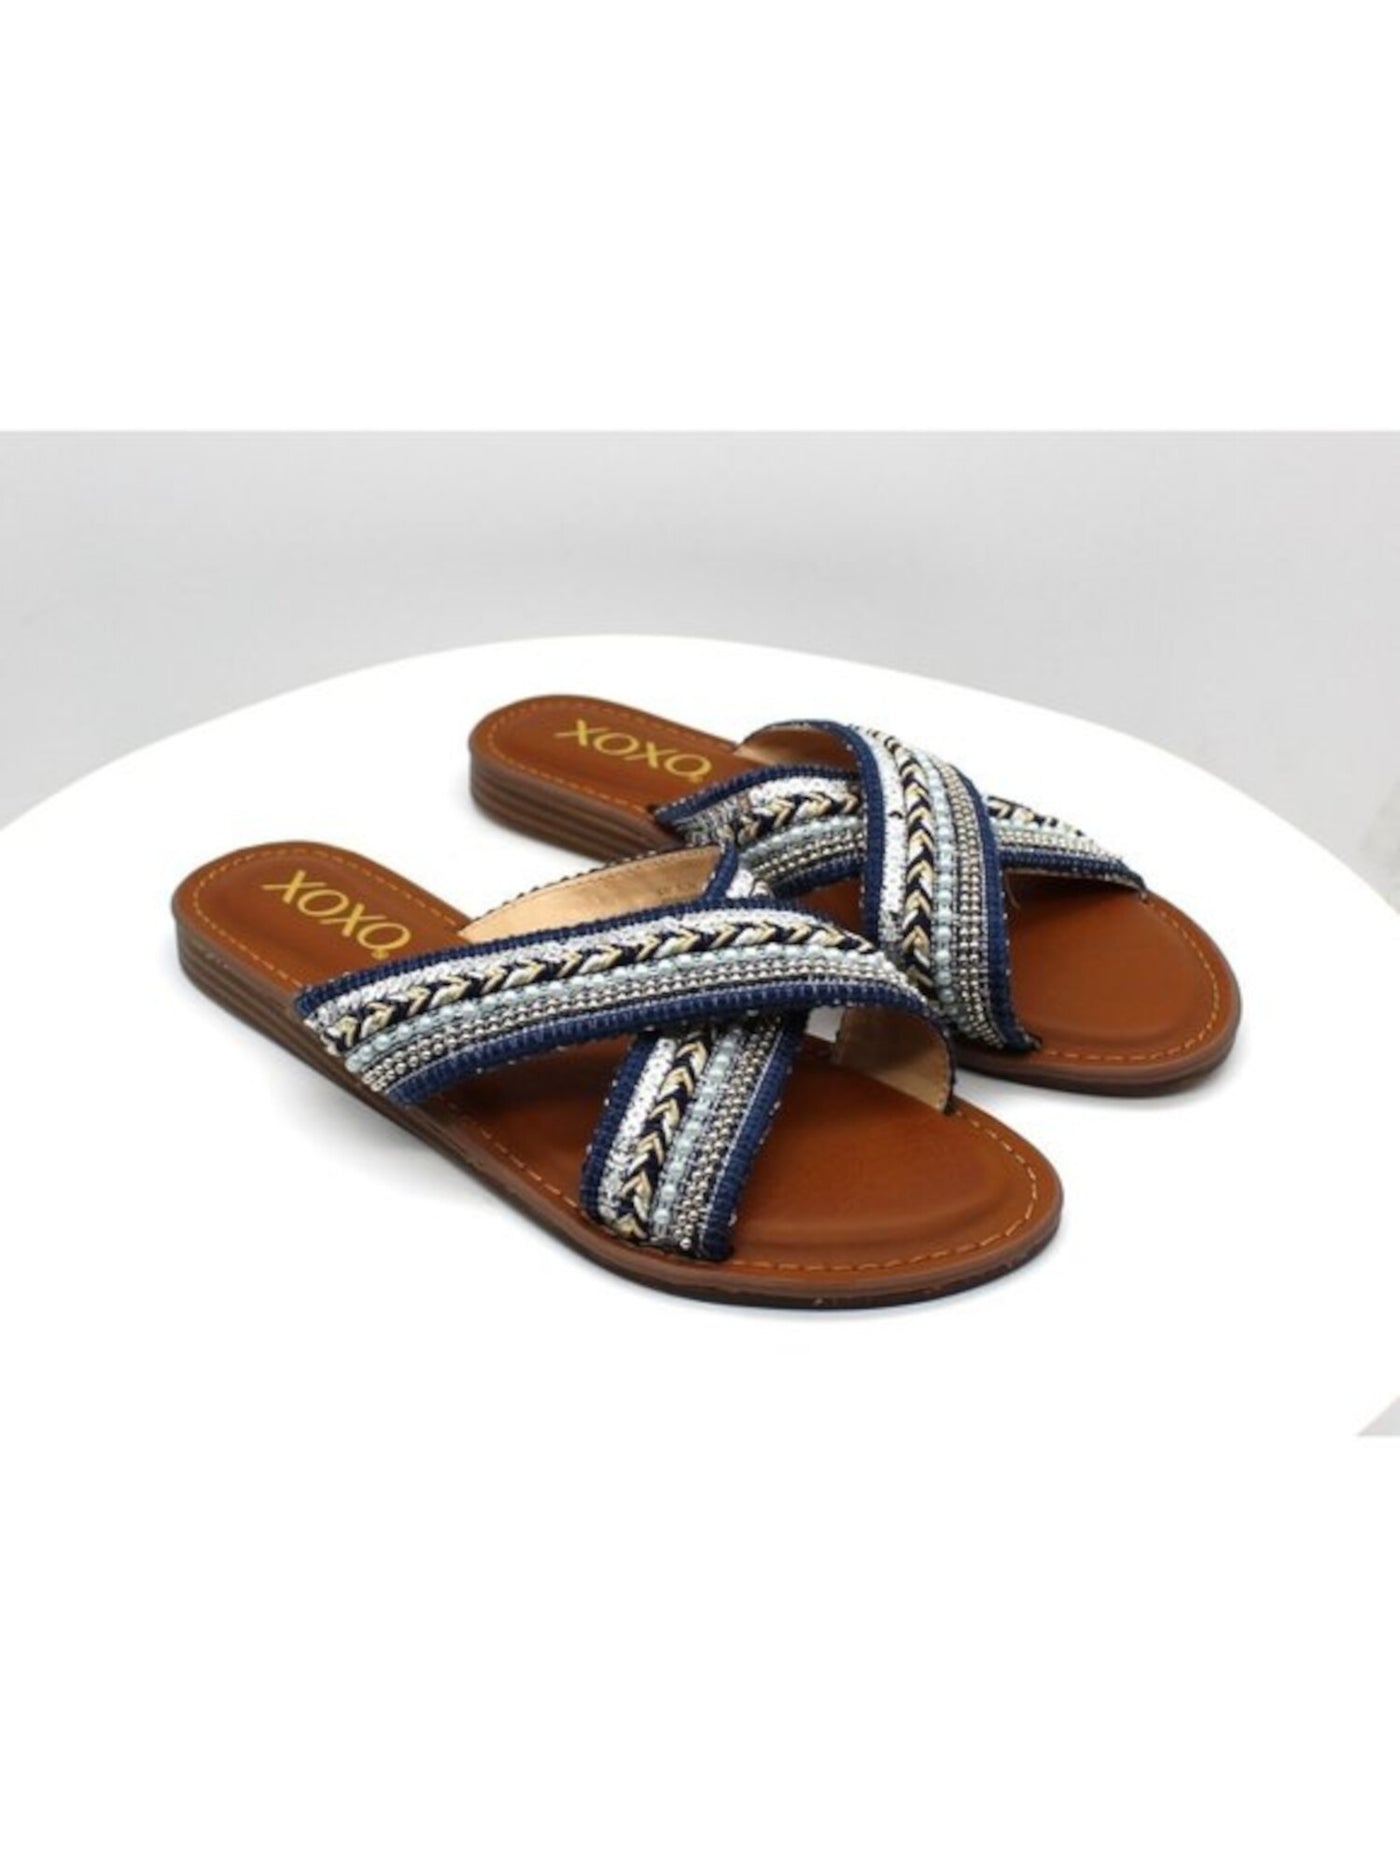 XOXO Womens Blue Crisscross Straps Embellished Studded Ron Round Toe Slip On Slide Sandals Shoes 6 M